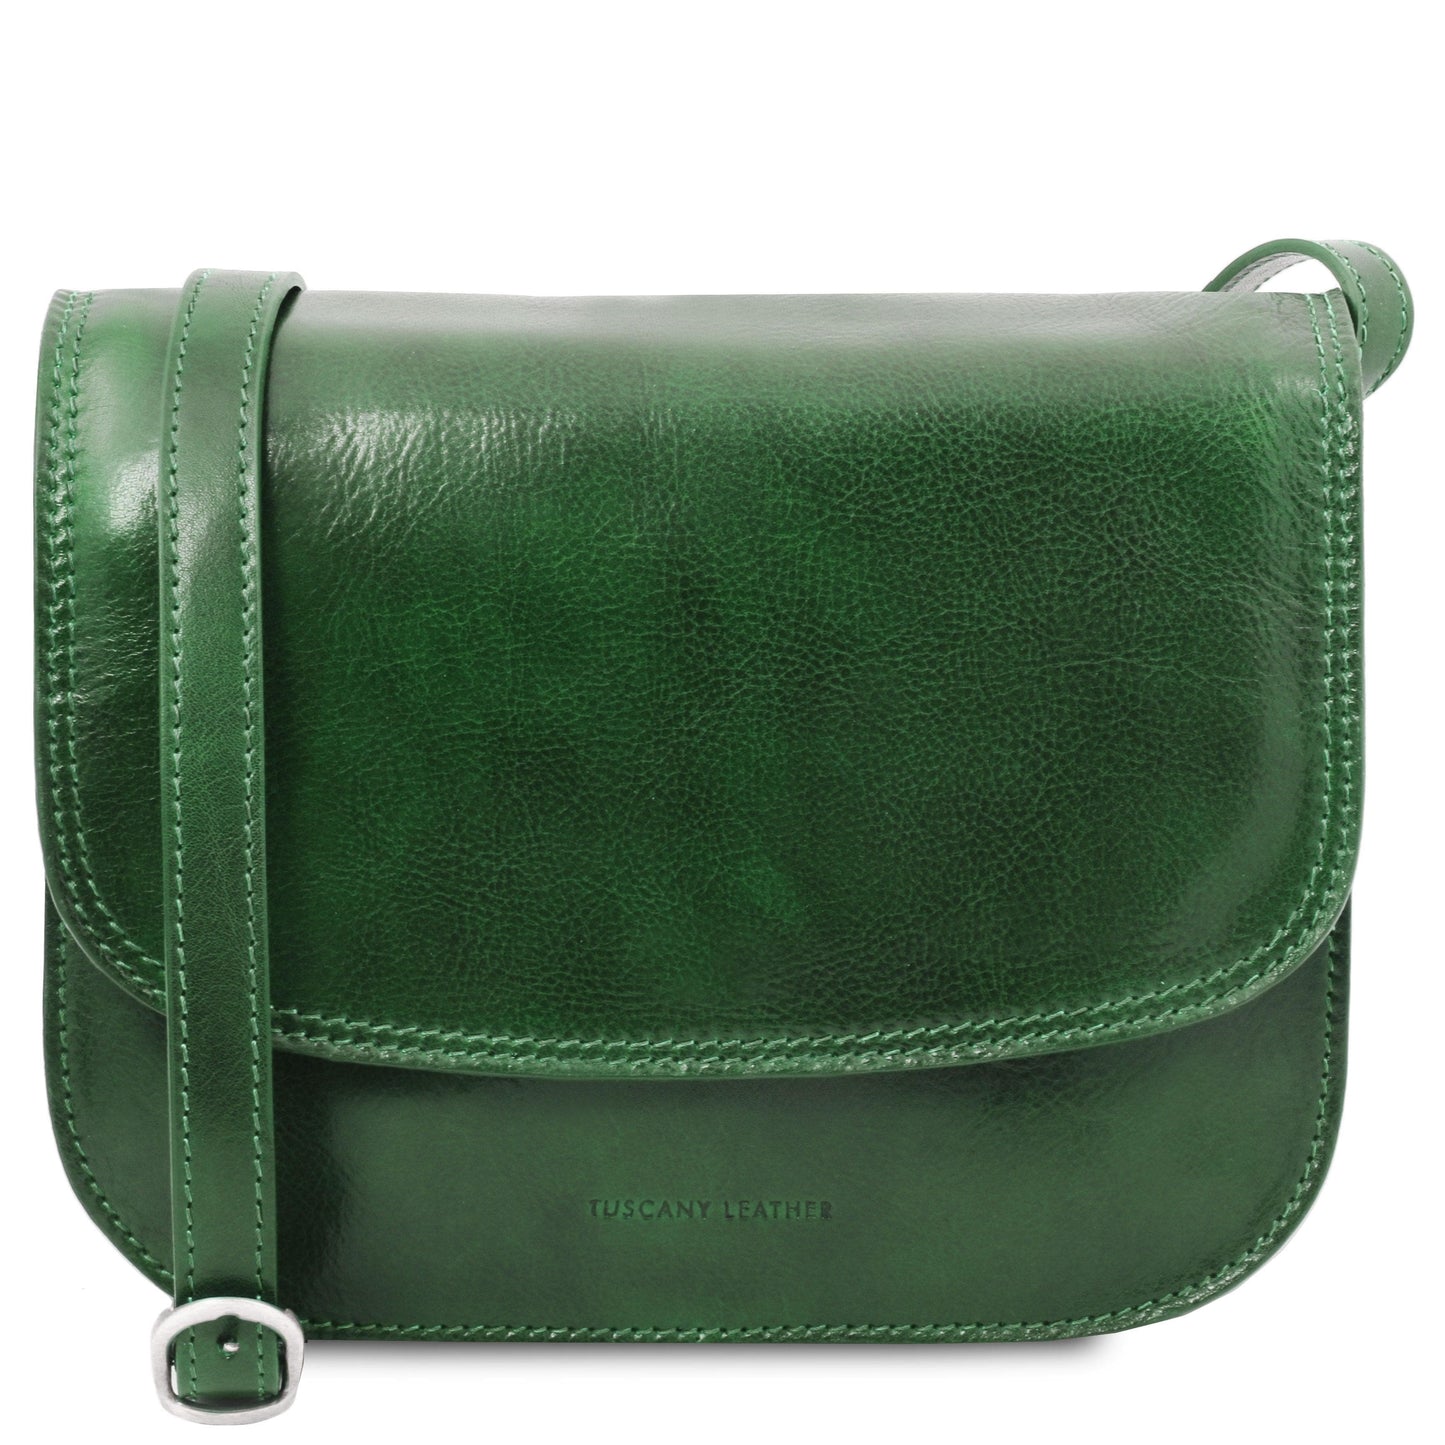 Greta - Lady leather saddle bag | TL141958 - Premium Leather shoulder bags - Just €168.36! Shop now at San Rocco Italia